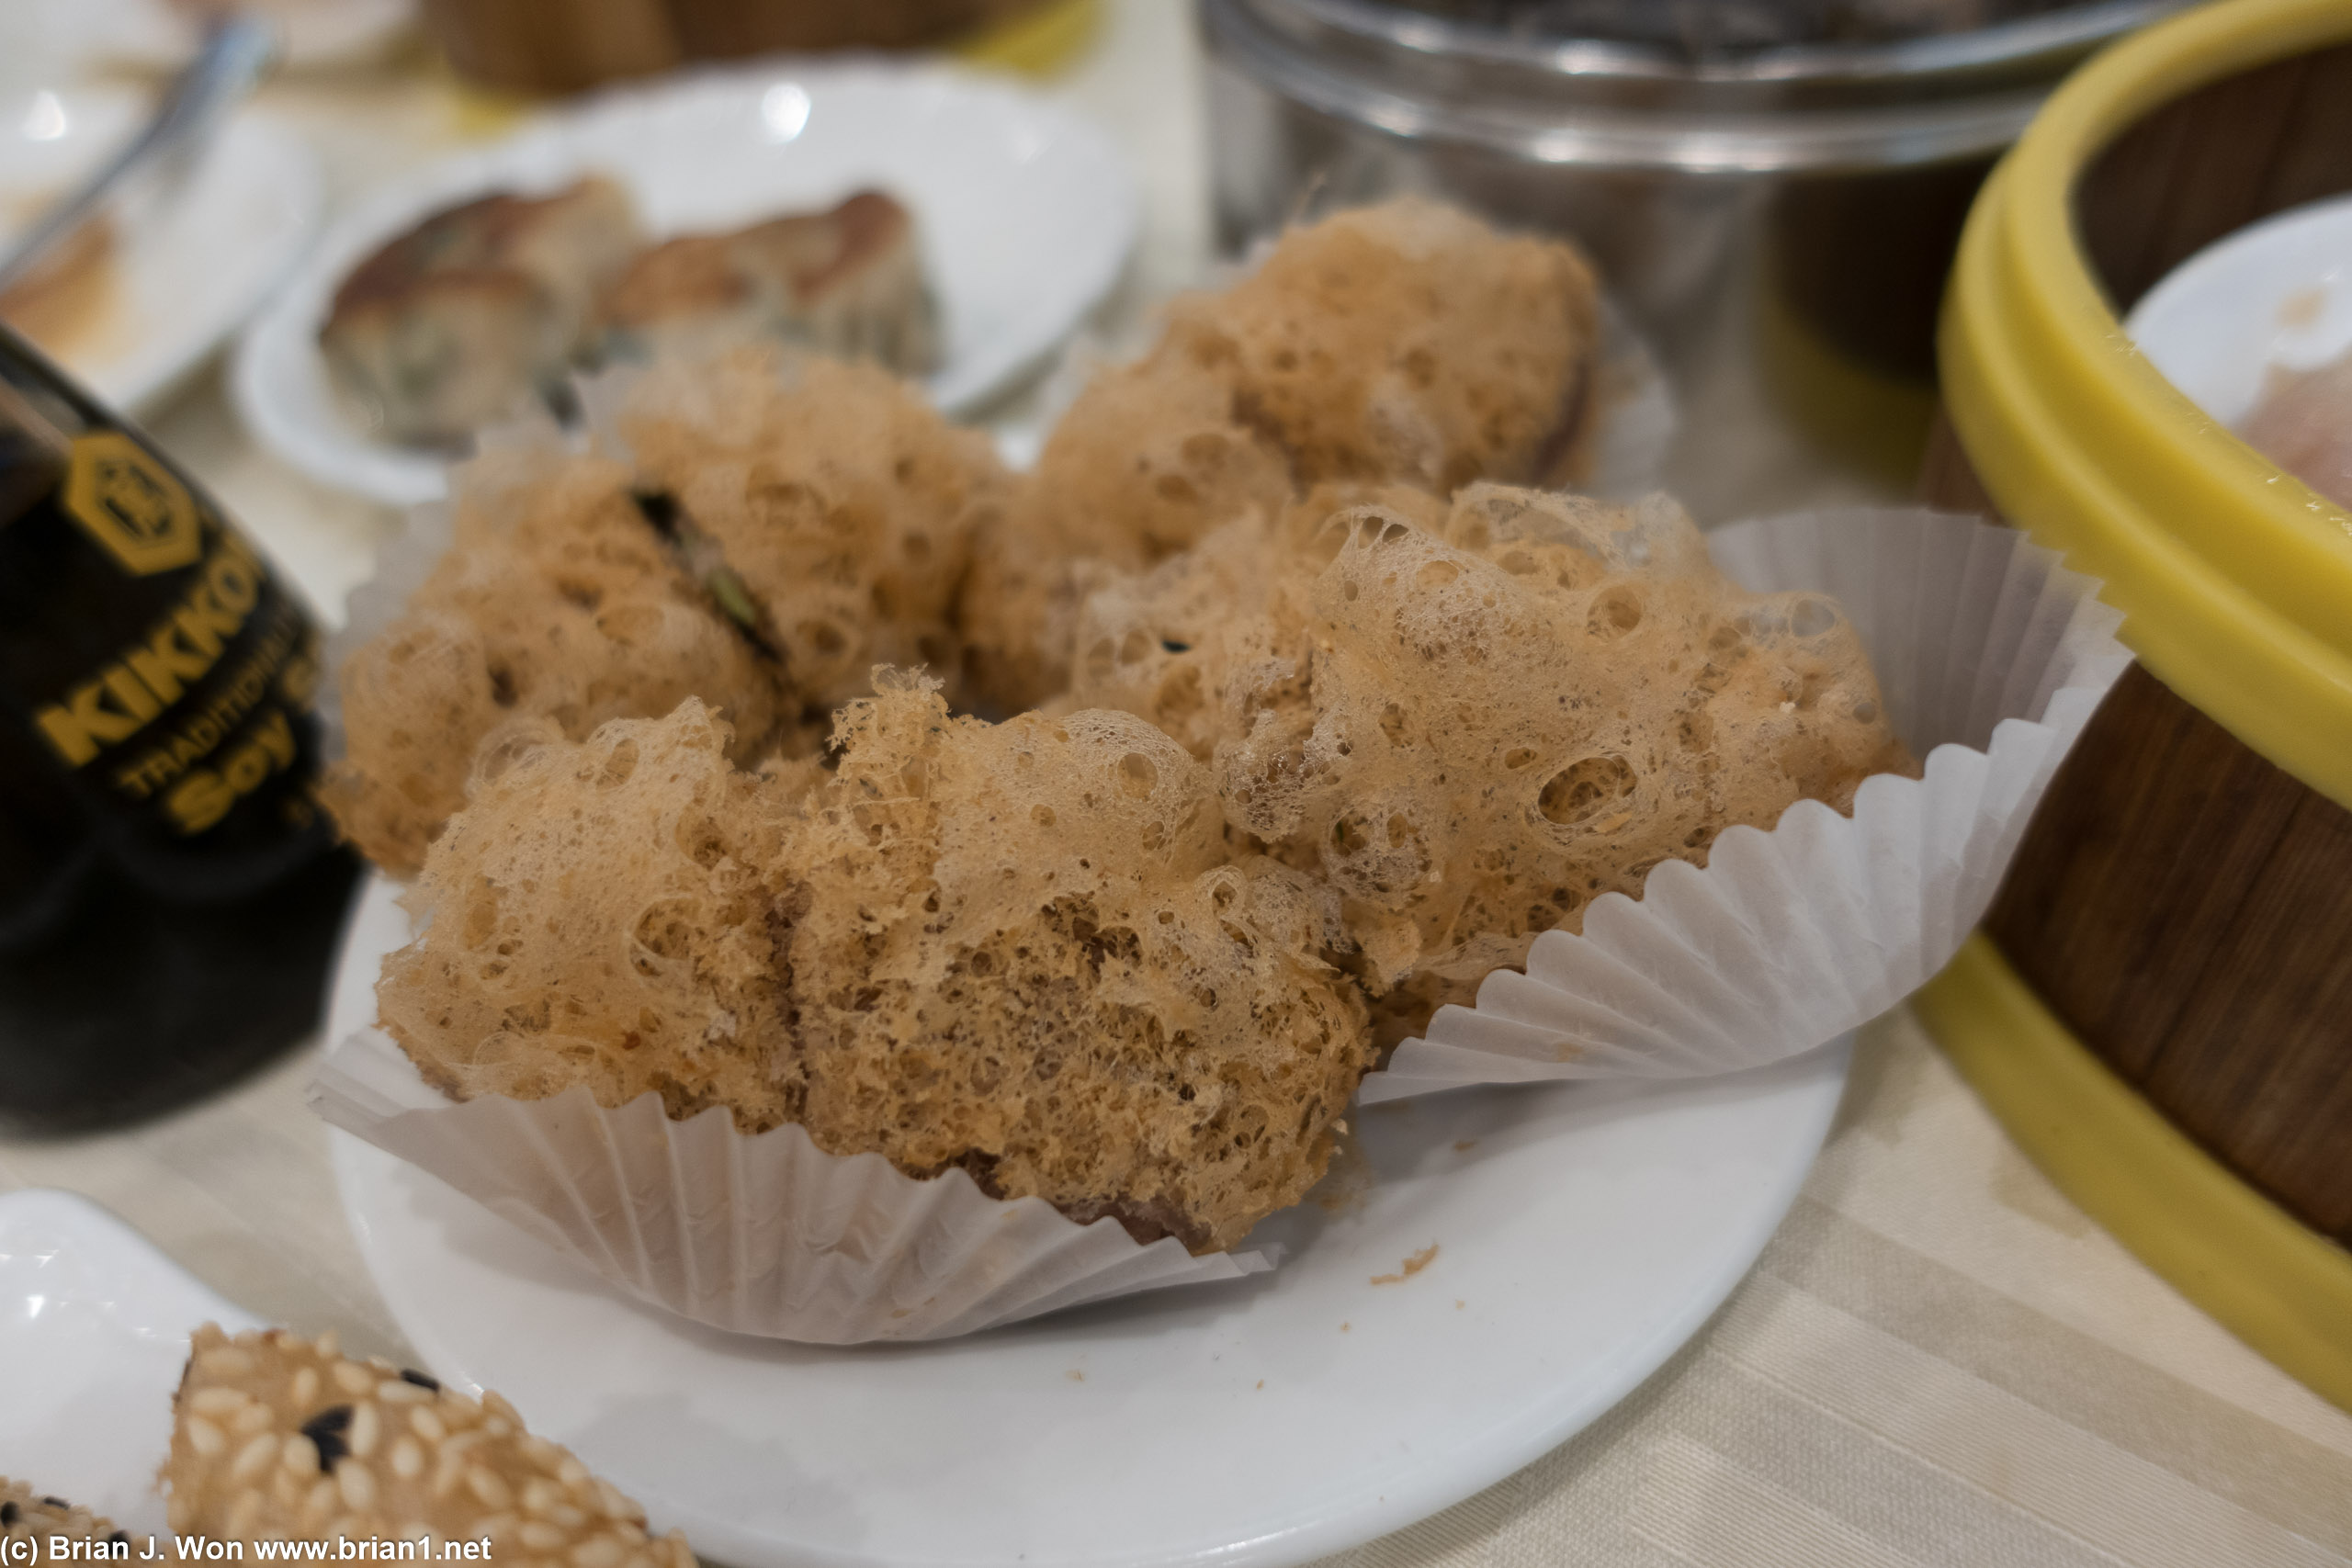 Wu gok - deep fried taro balls. Who needs arteries?